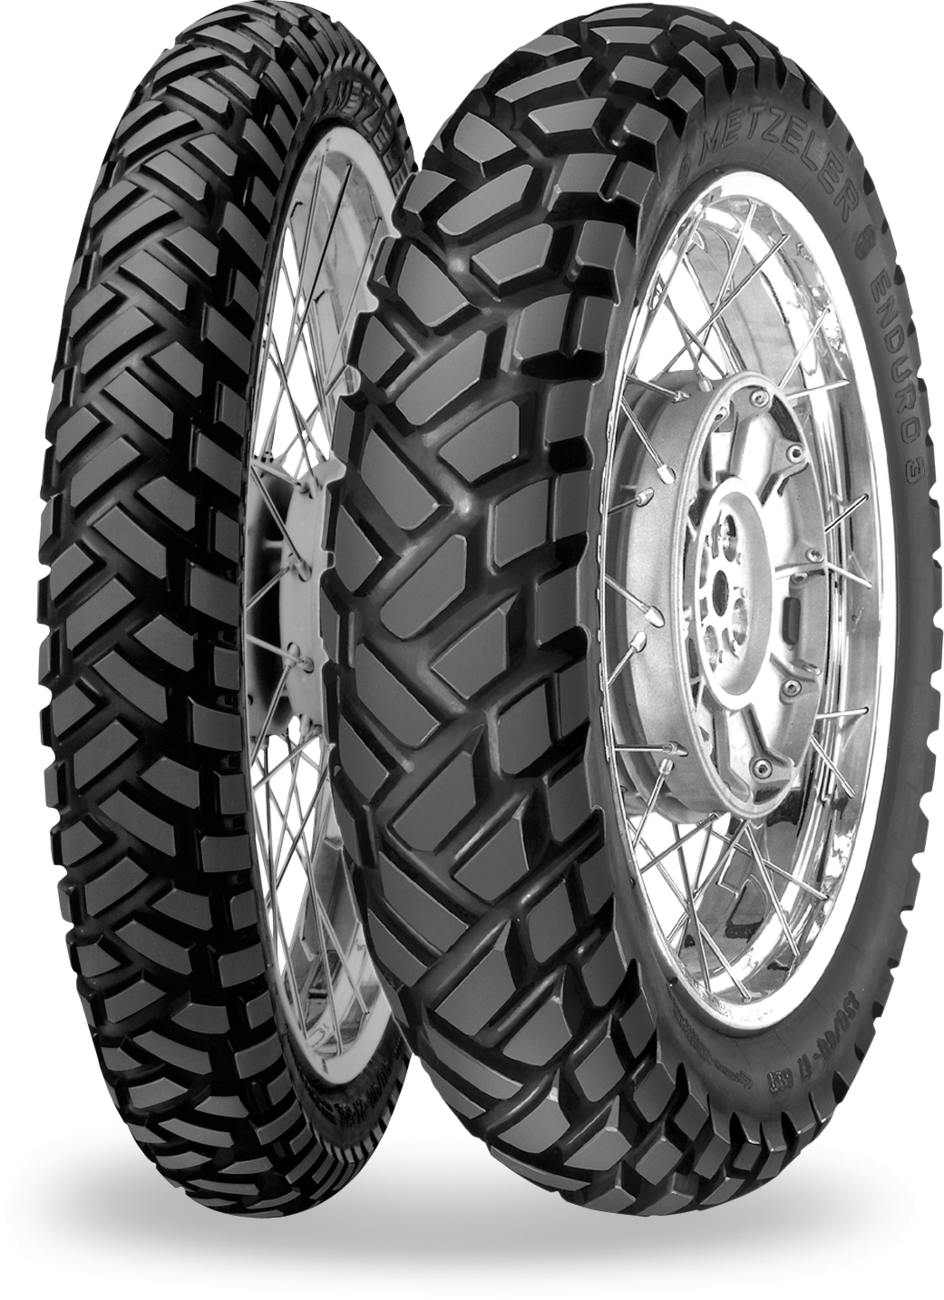 METZELER Tire - Enduro 3 Sahara - Rear - 130/80-17 - 65T 142700